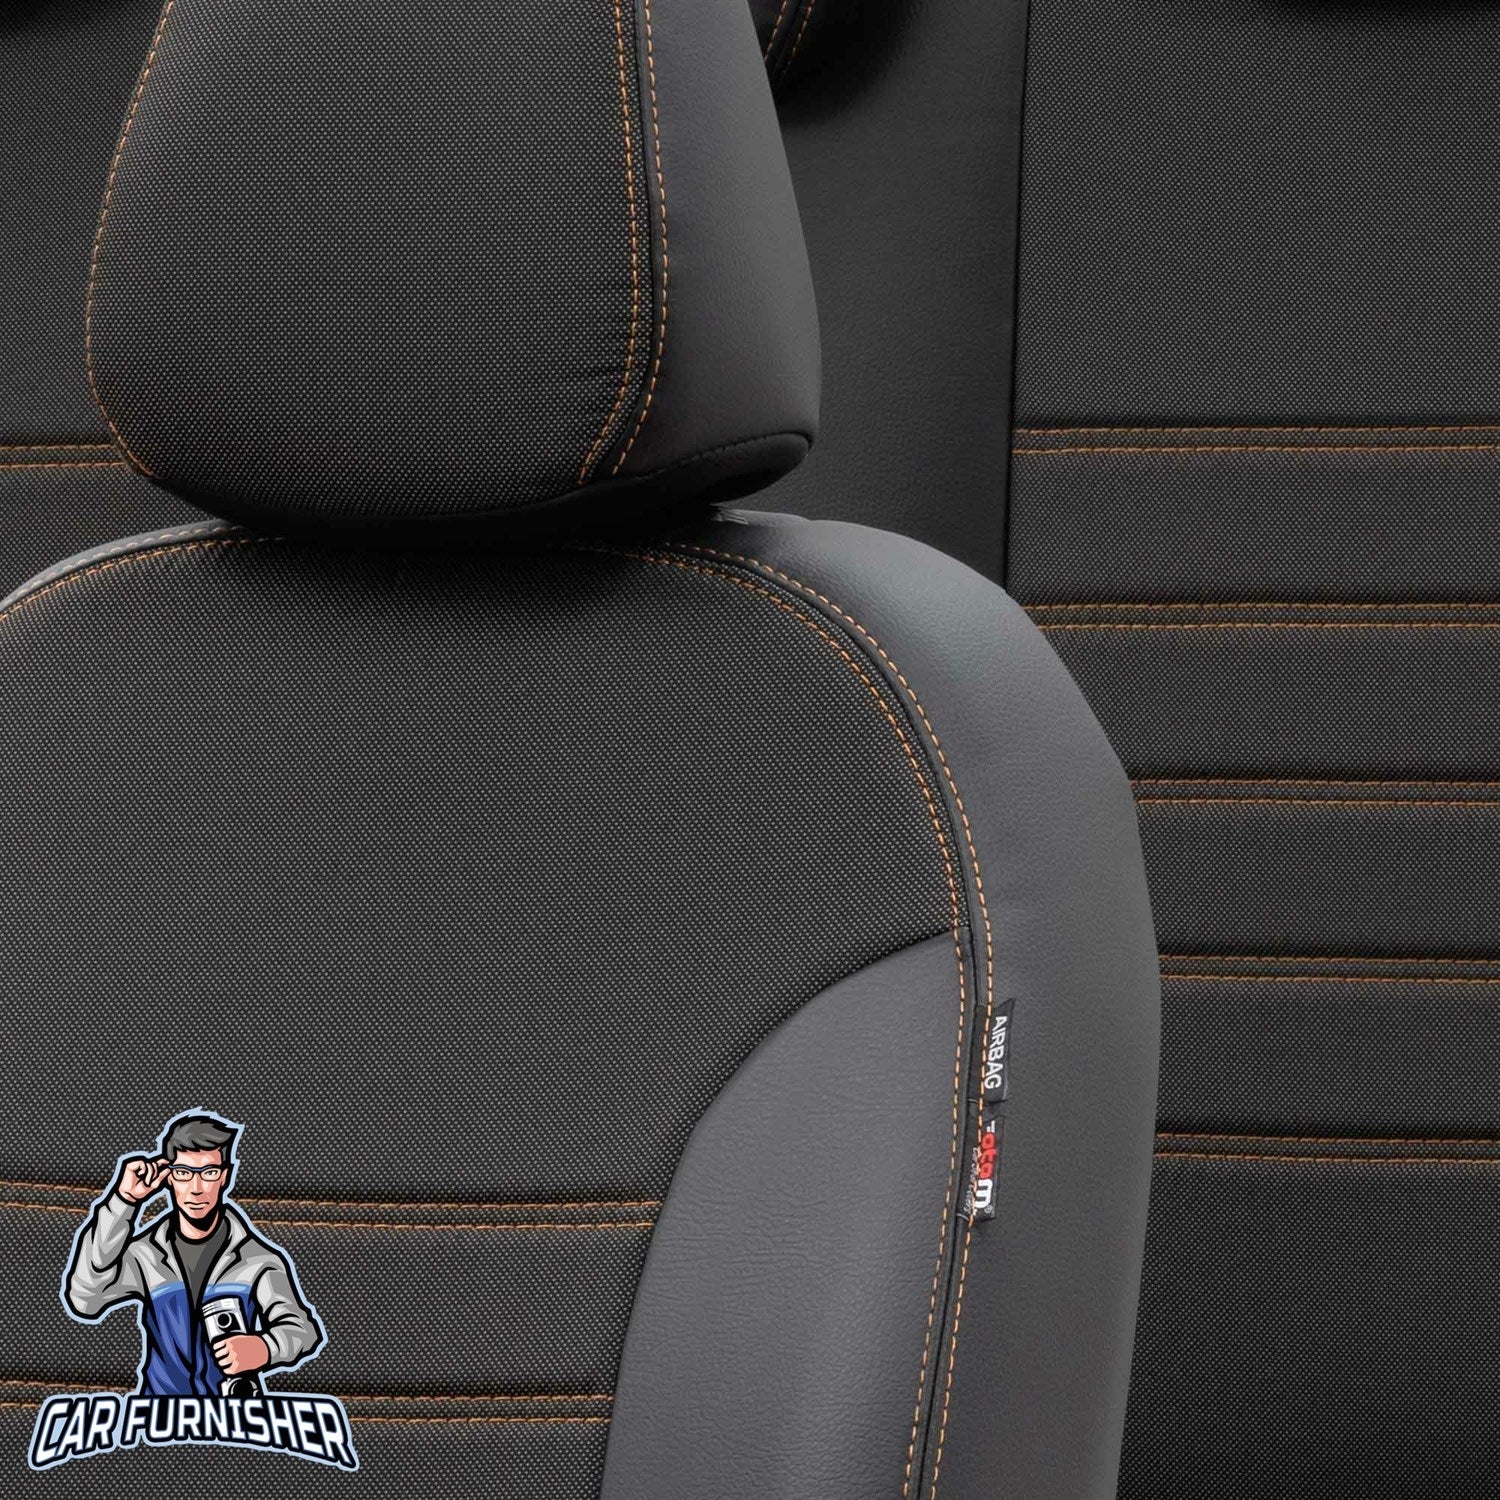 Mercedes X-Class Seat Covers Paris Leather & Jacquard Design Dark Beige Leather & Jacquard Fabric